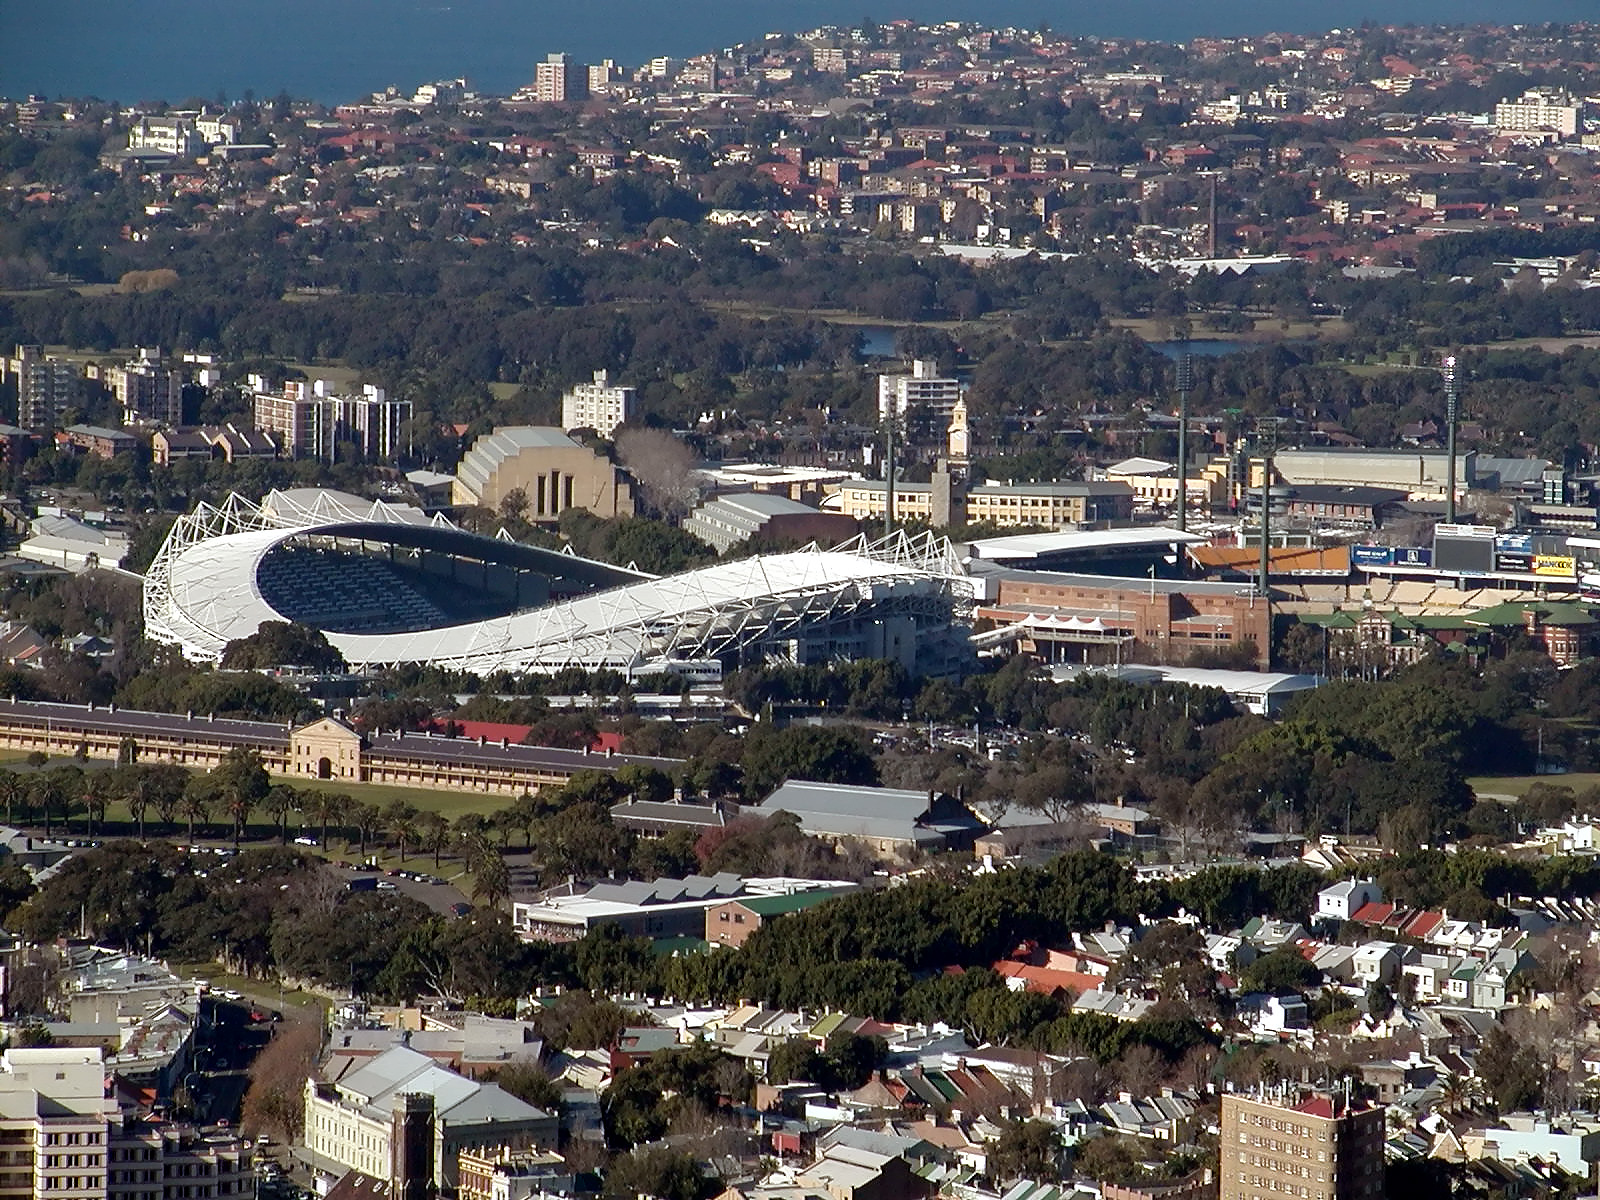 20-Jun-2001 10:19 - Sydney - Beer label - Squires Original Amber - Football stadium and Sydney cricket ground